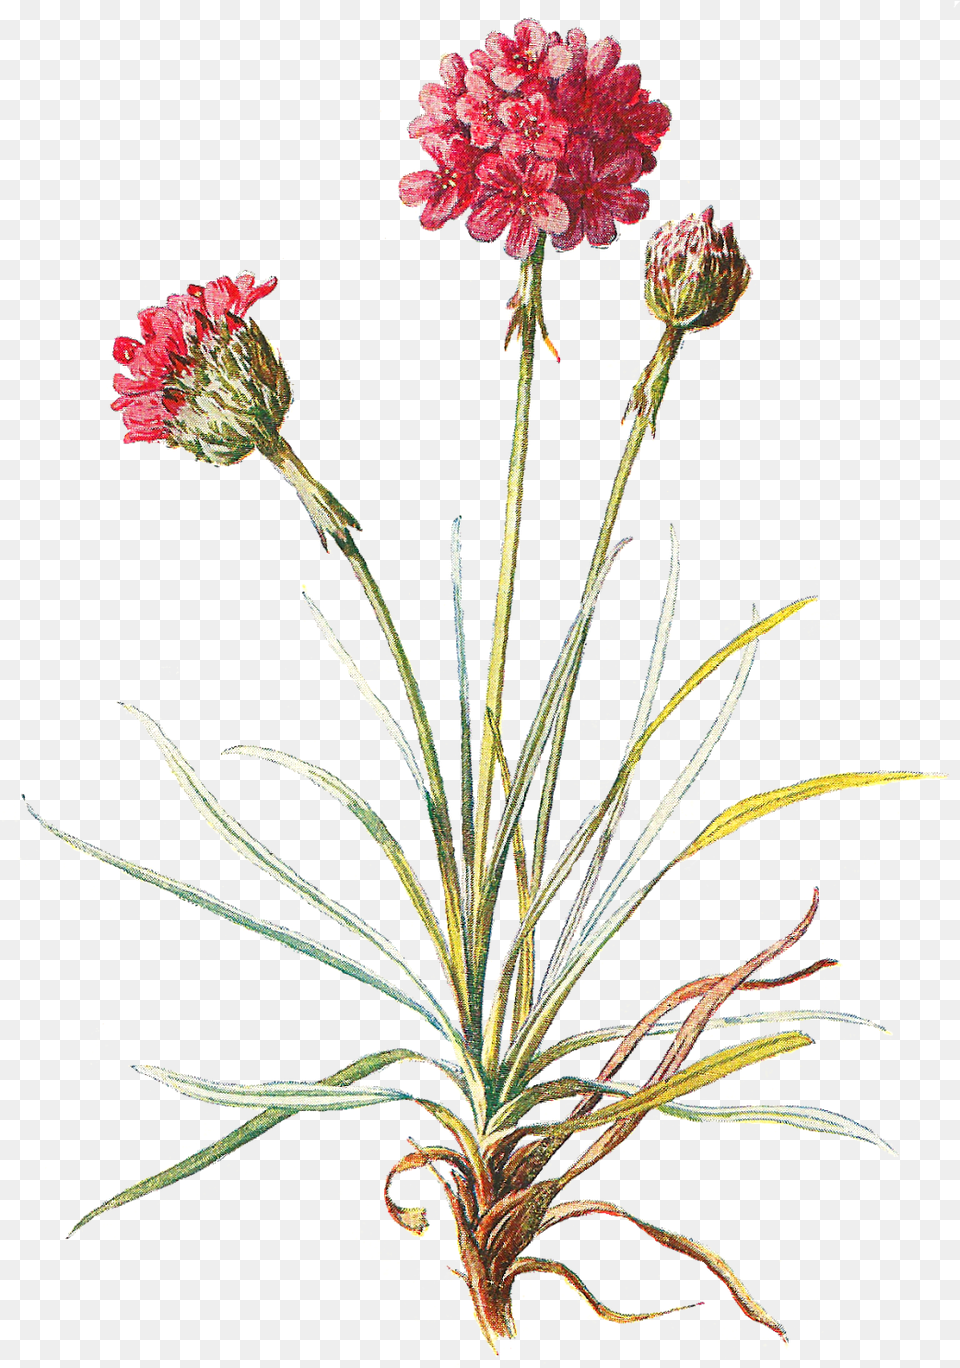 Clip Freeuse Antique Images Wildflower Stock Image Wildflower Clipart, Carnation, Flower, Plant, Flower Arrangement Png